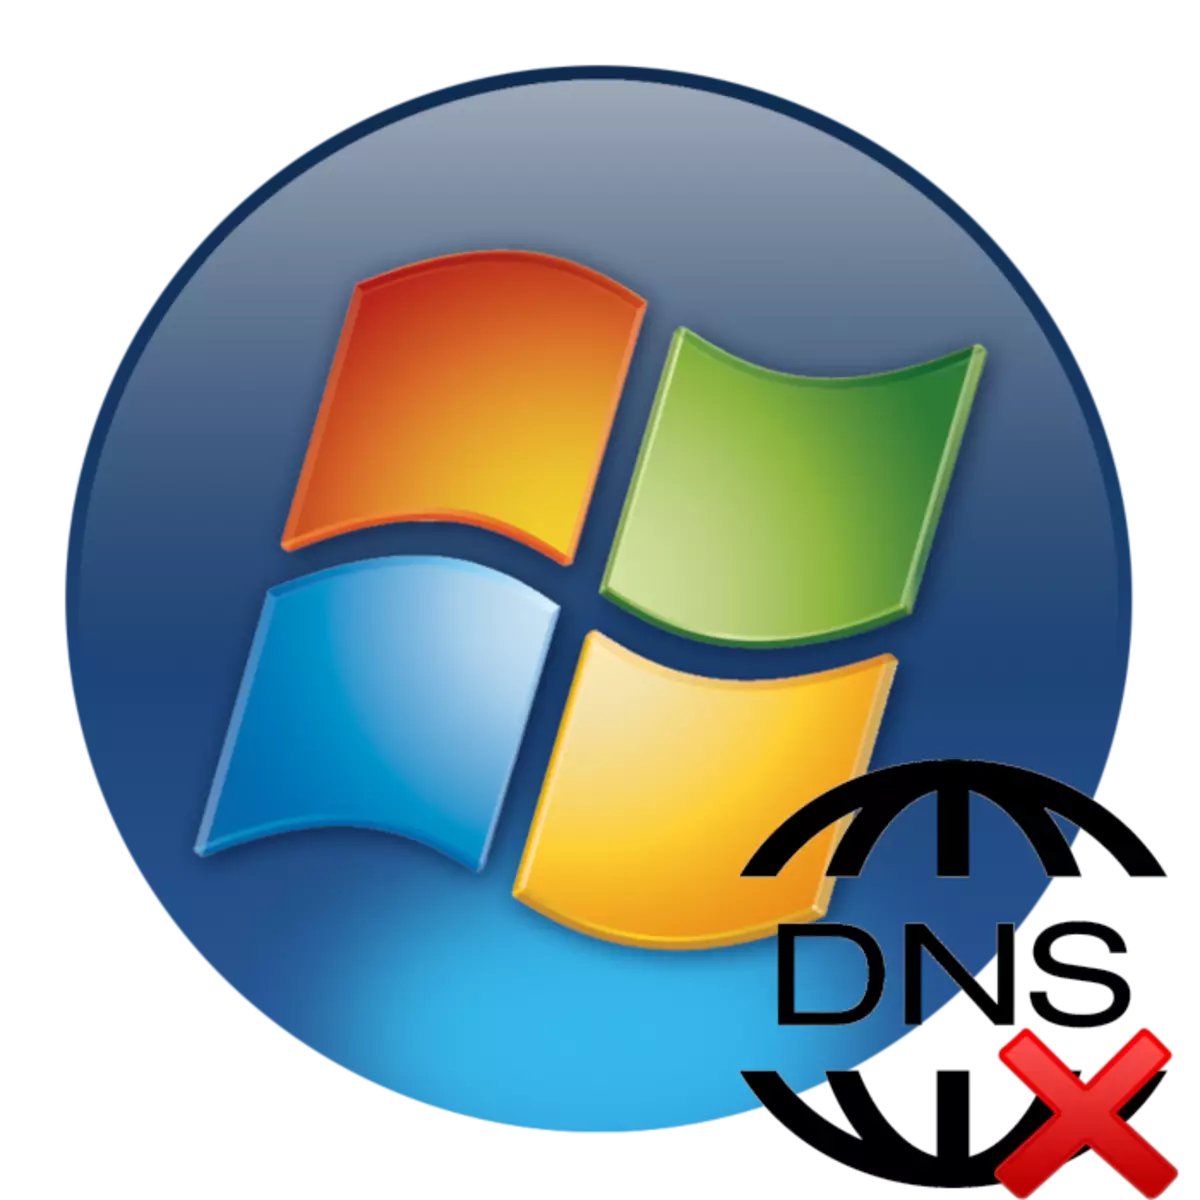 DNS-server is not responding in Windows 7